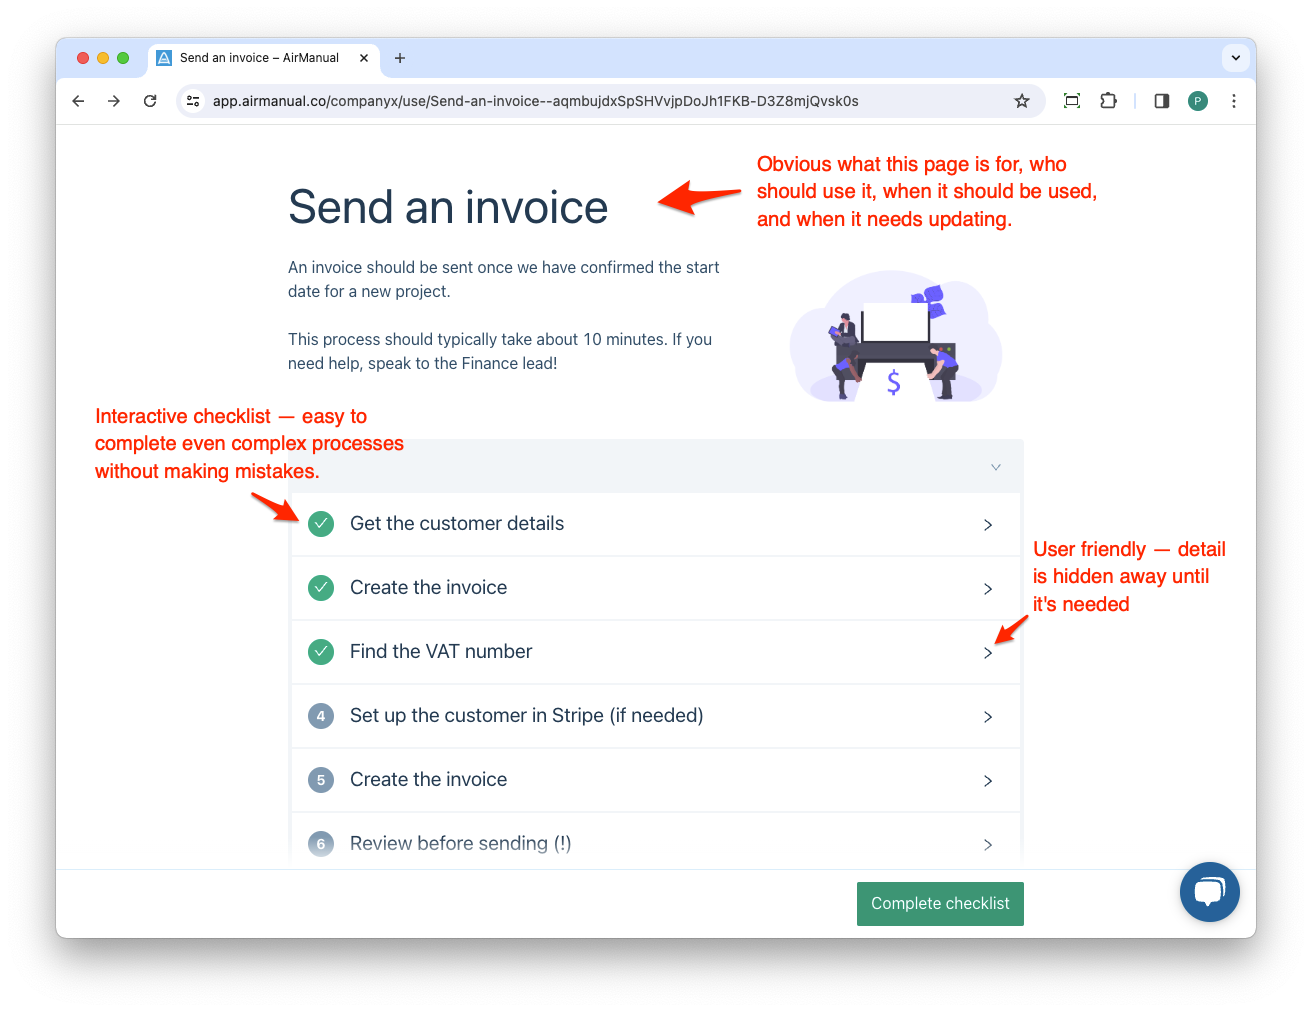 Screenshot of AirManual: A checklist for sending an invoice